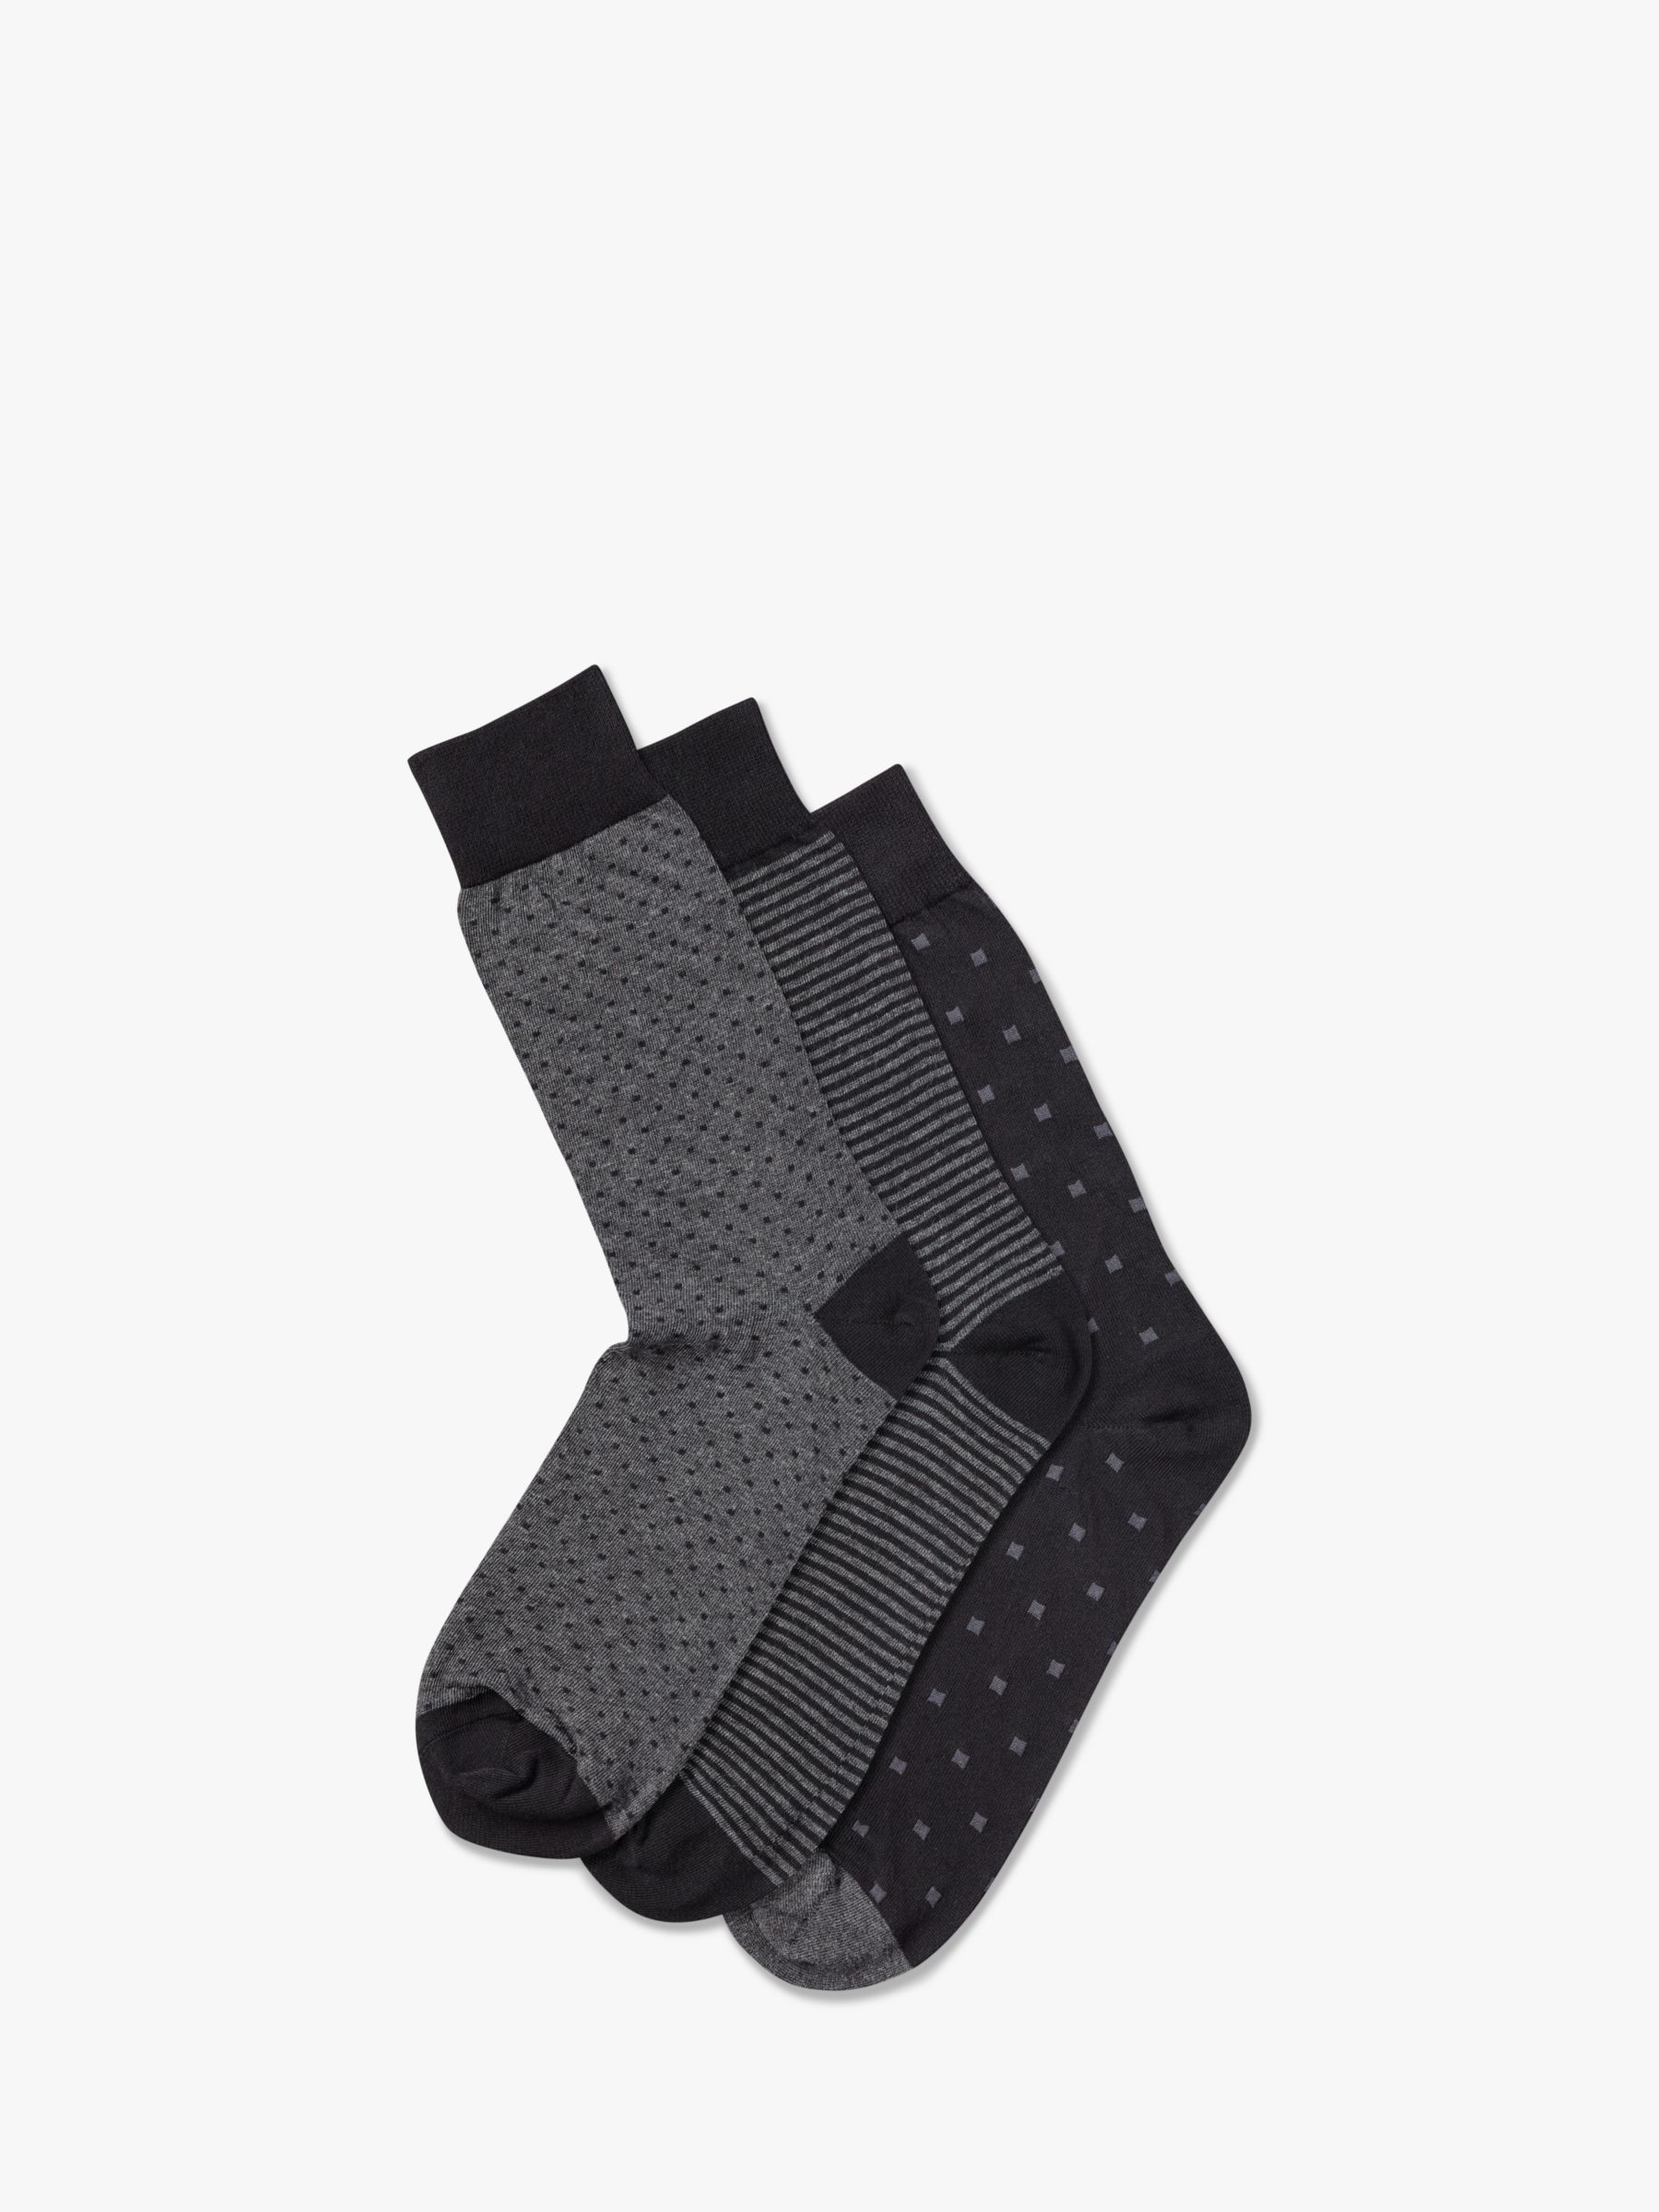 Buy Charles Tyrwhitt Cotton Rich Socks, Pack of 3, Black/Grey Online at johnlewis.com